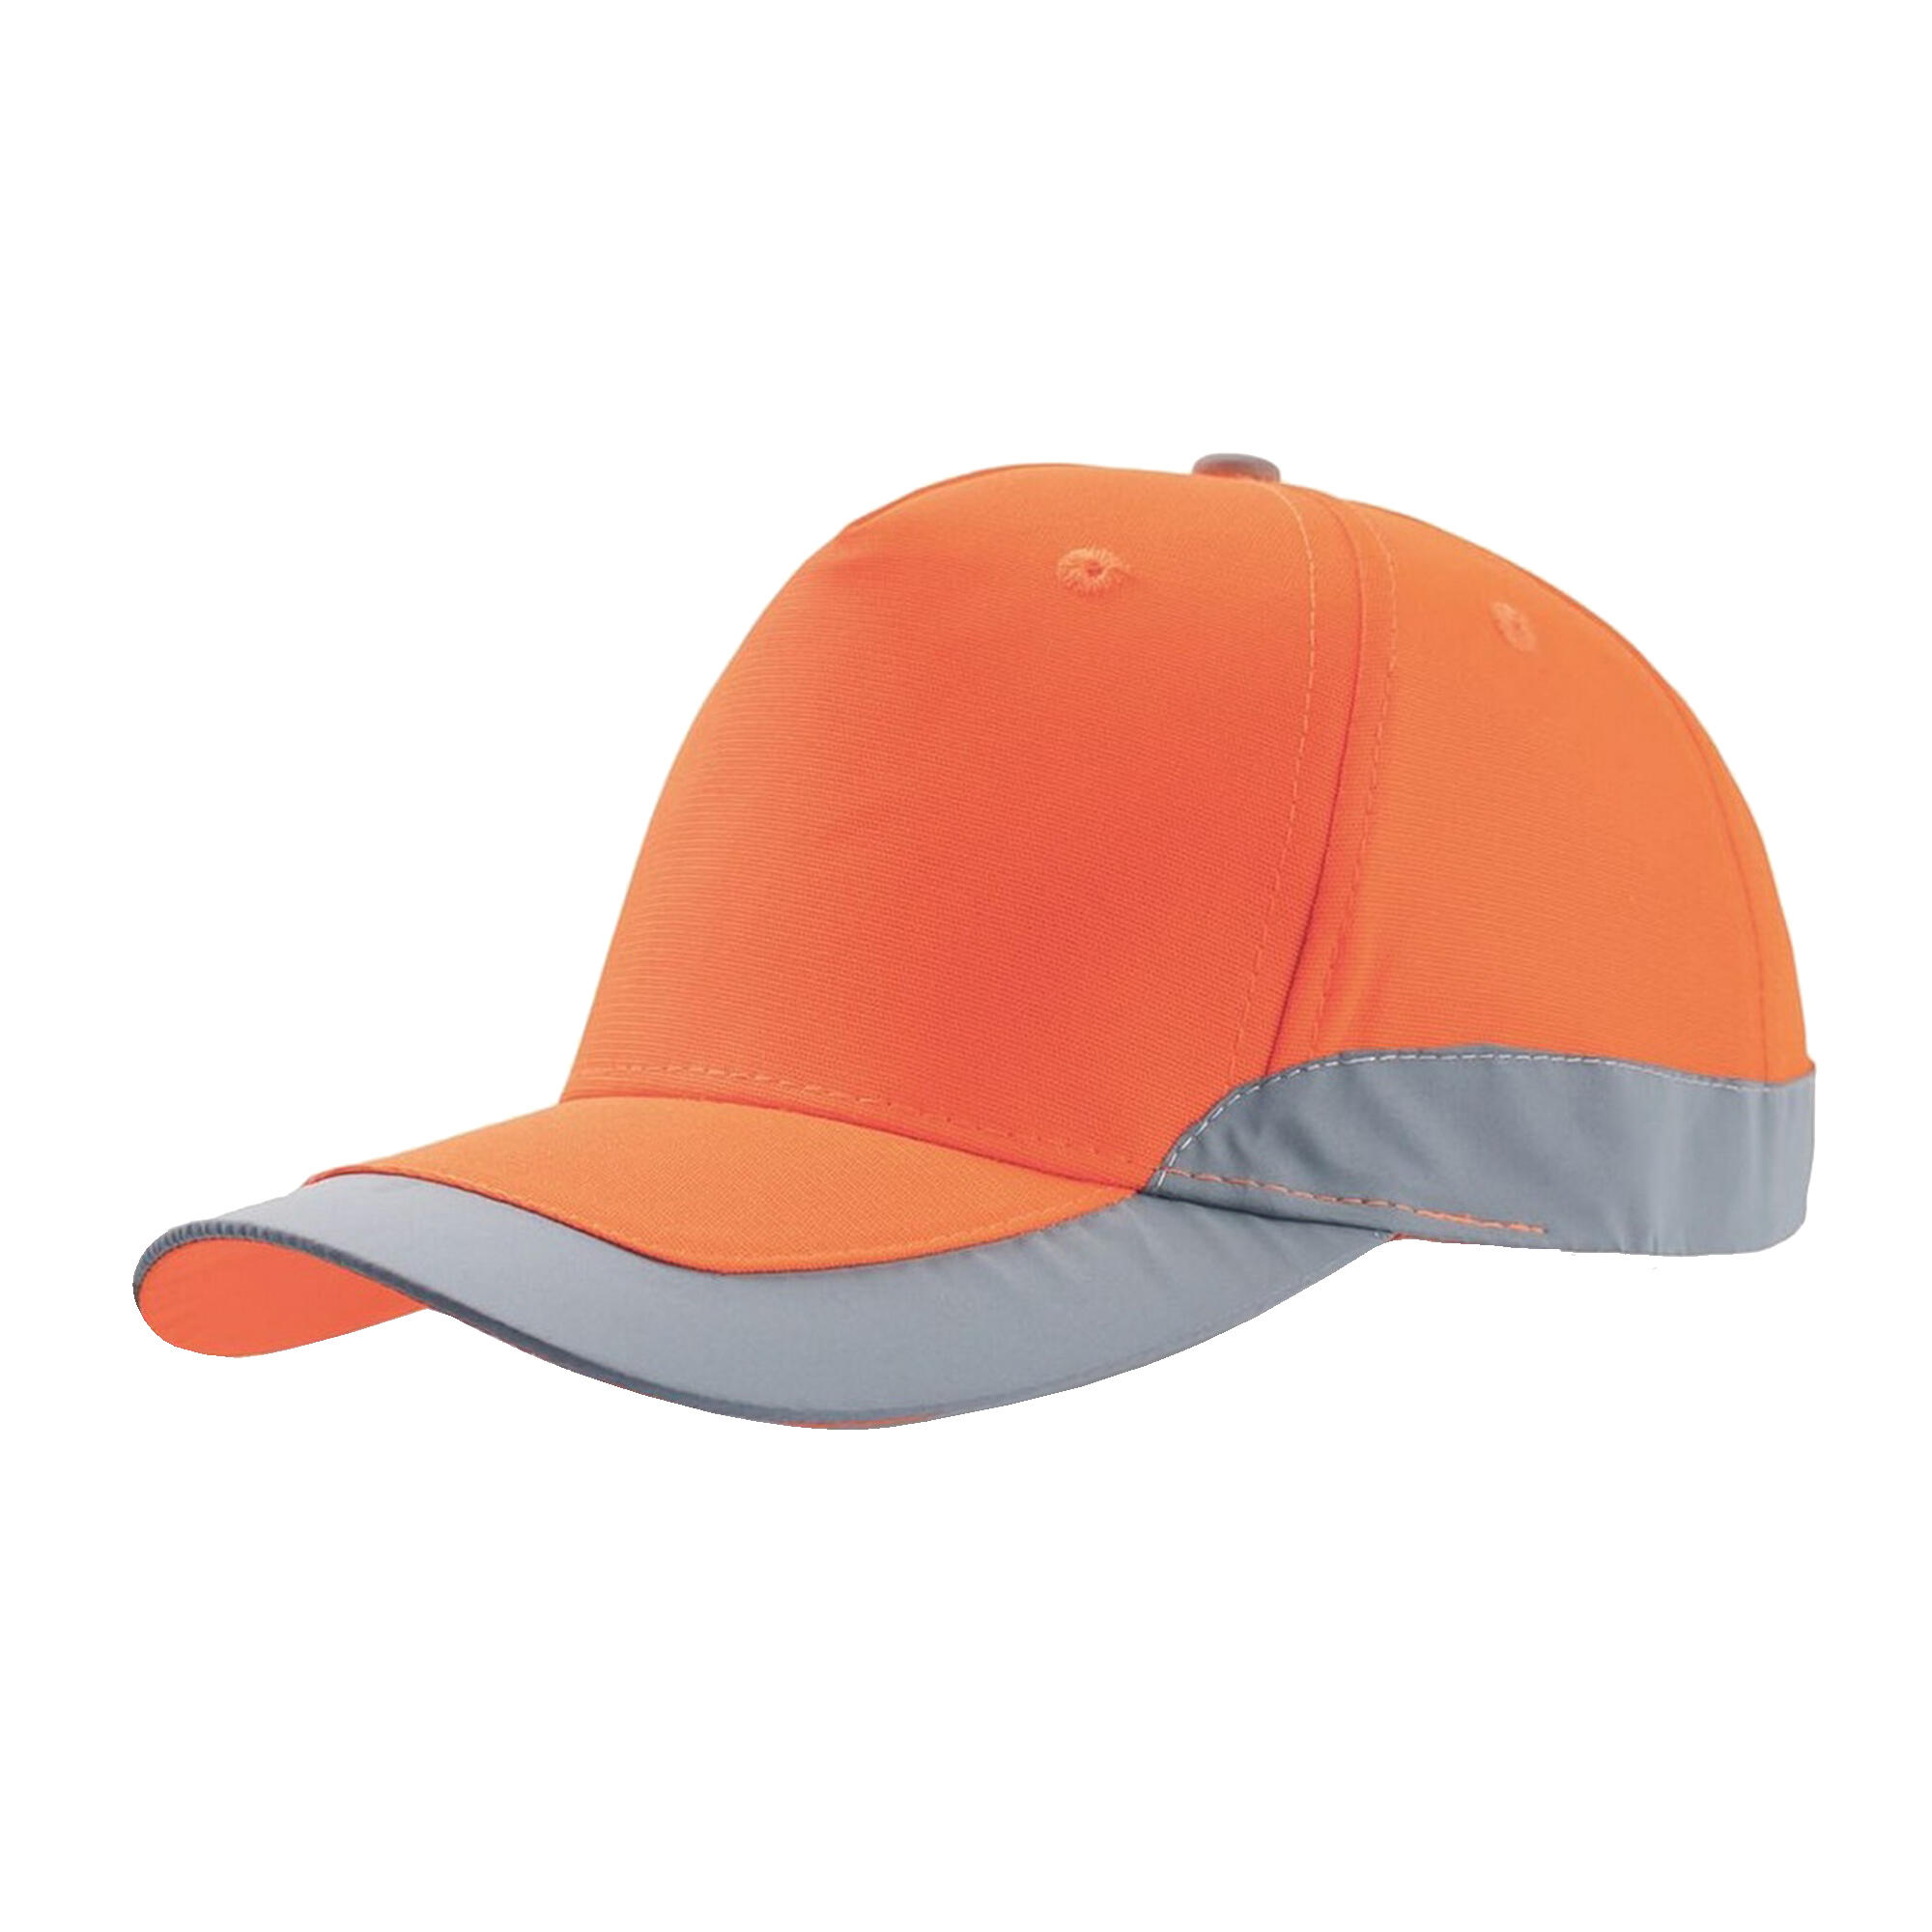 Helpy 5 Panel Reflective Cap (Safety Orange) 1/5